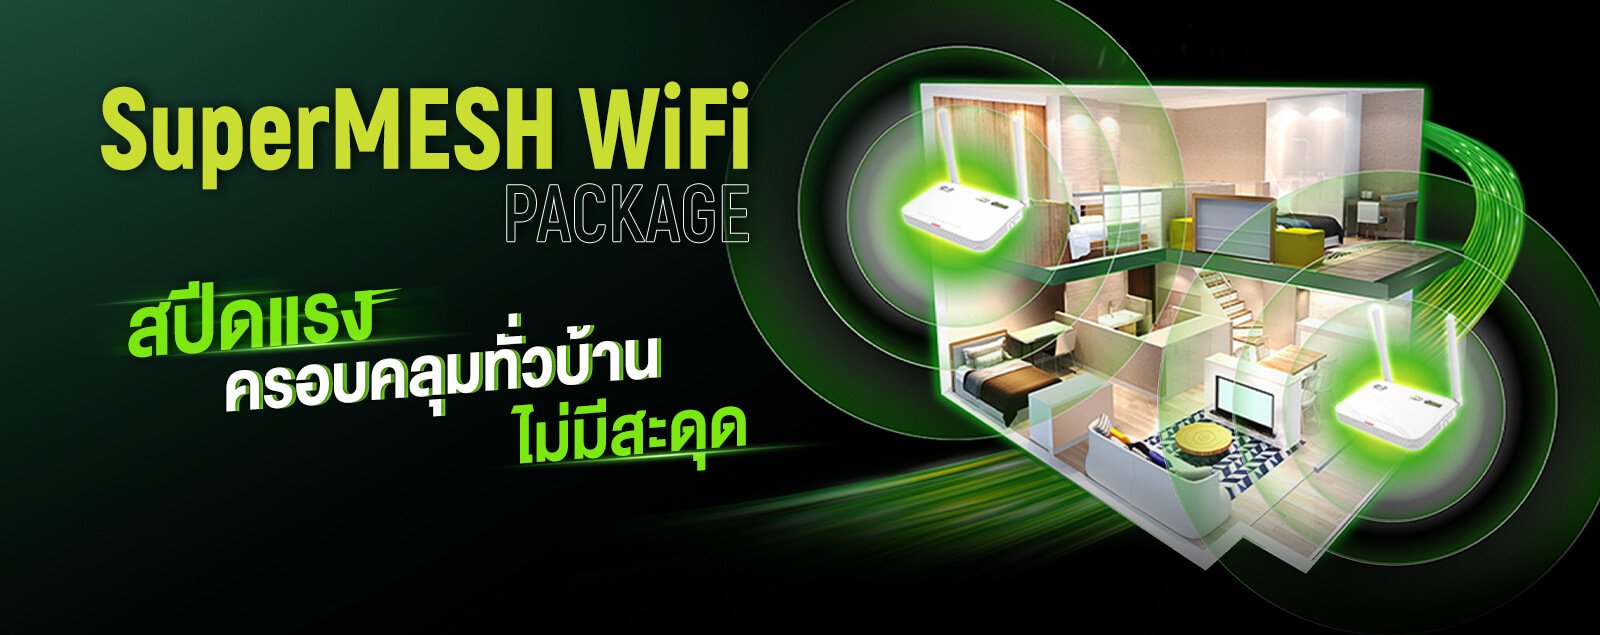 Super Mesh Wifi เน็ตแรงทั่วบ้าน เพื่อประสบการณ์ที่ดีกว่า